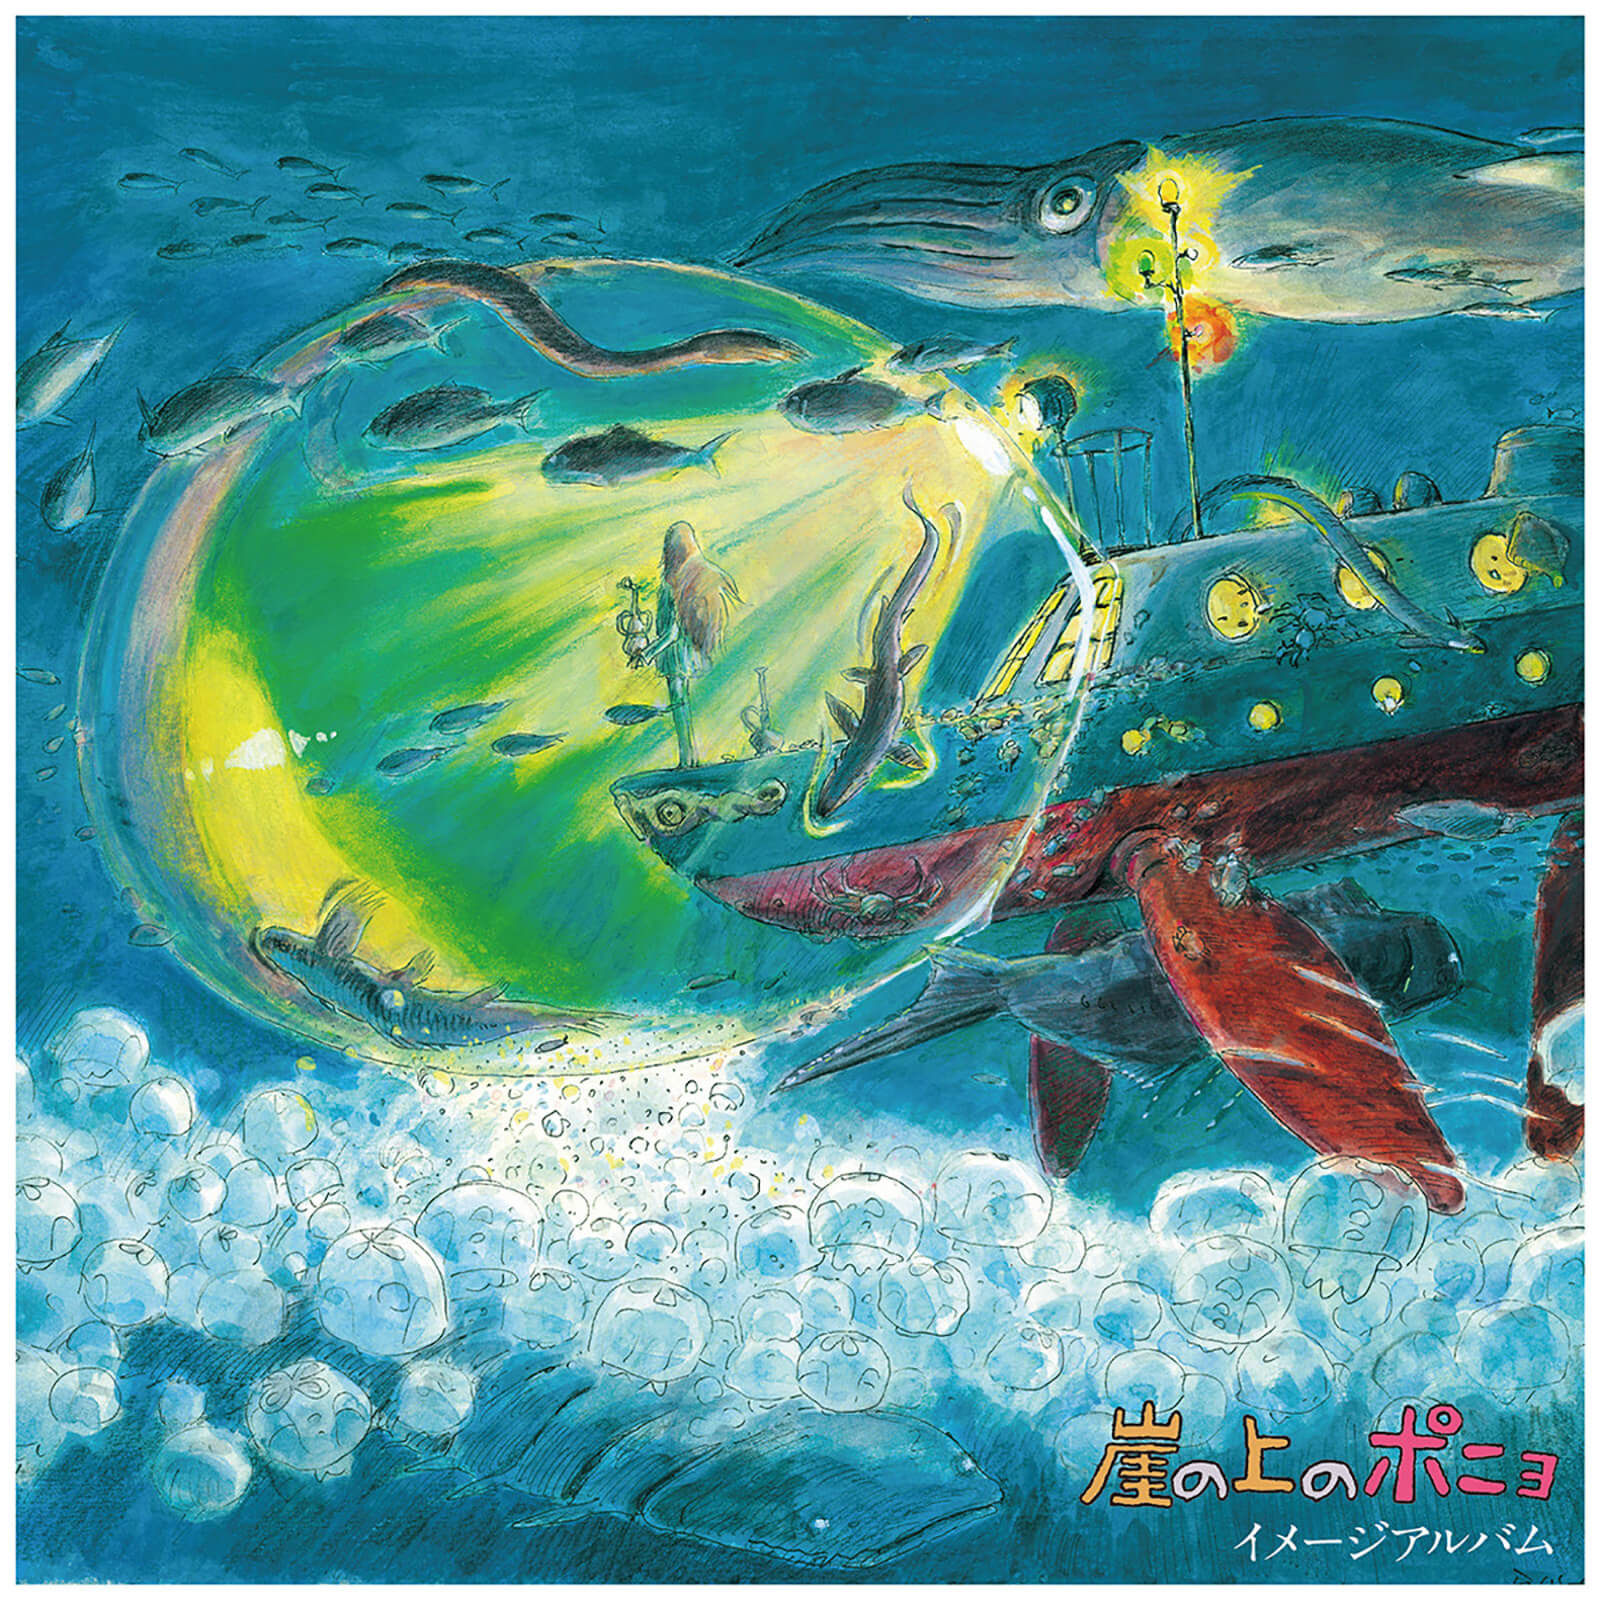 Studio Ghibli Records Ponyo On The Cliff By The Sea: Image Album LP